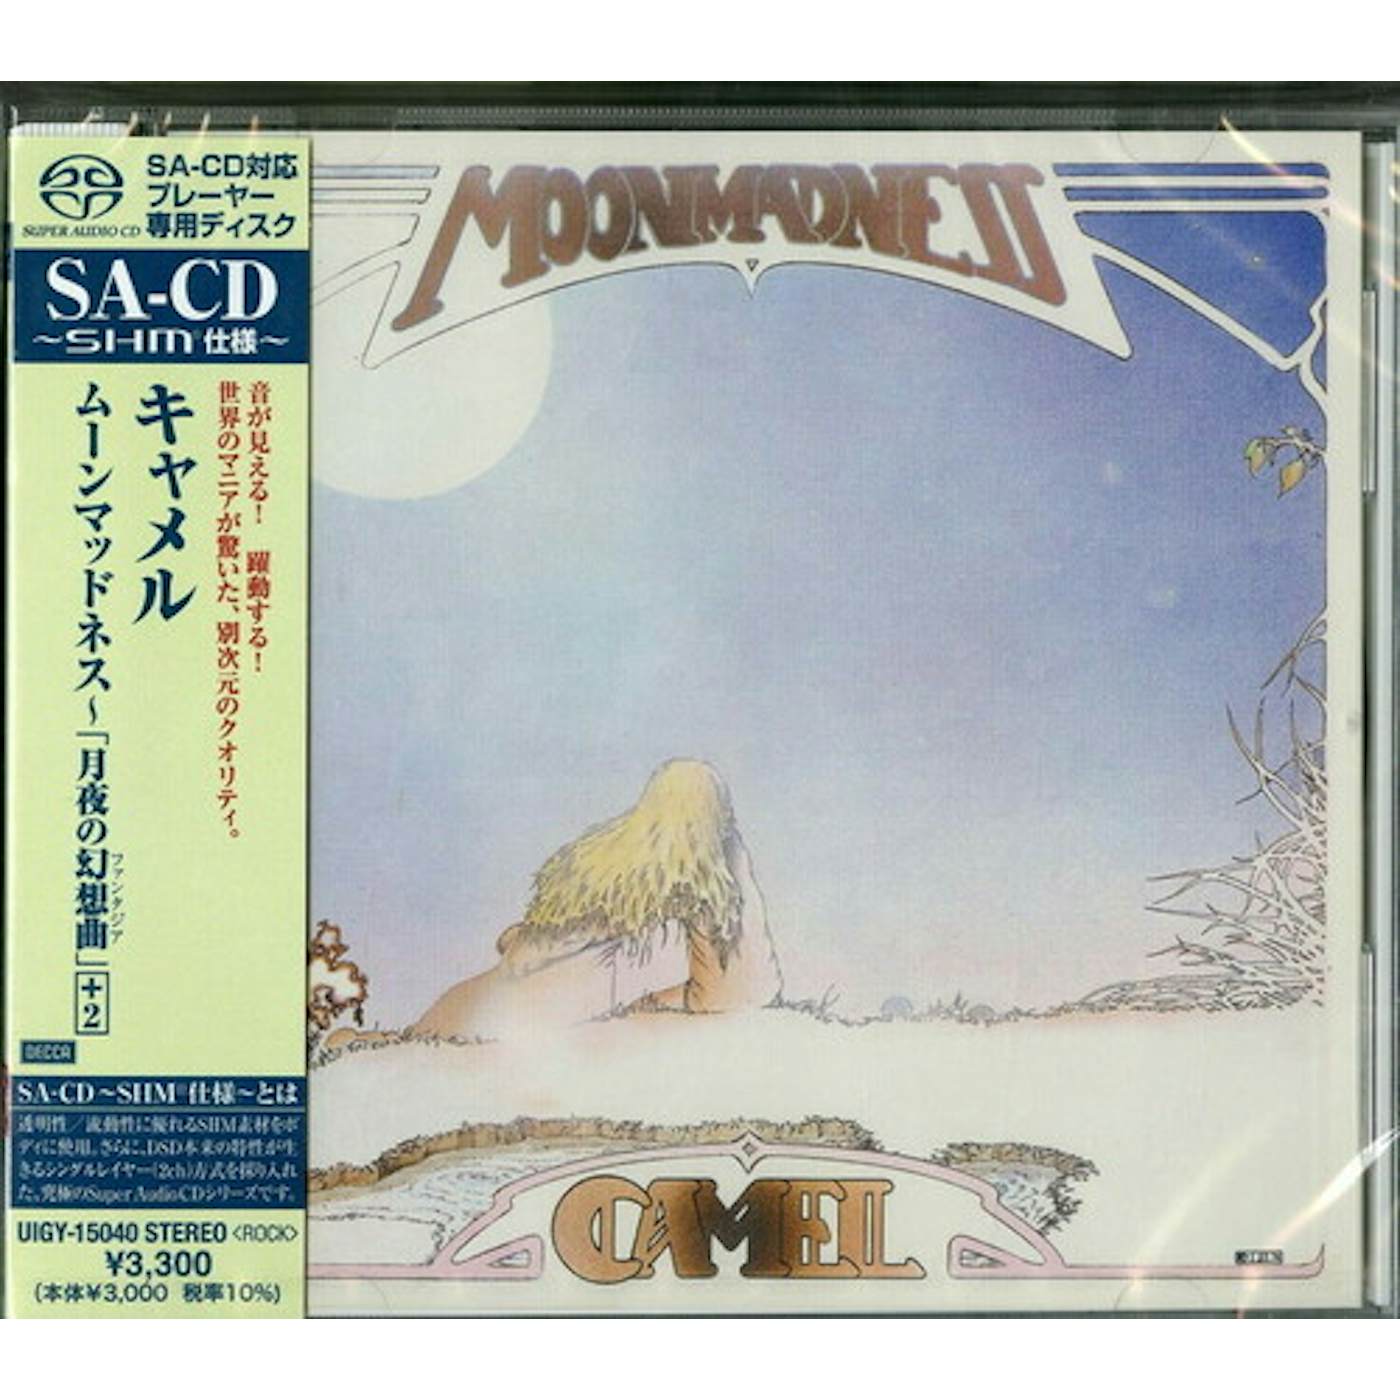 Camel MOONMADNESS Super Audio CD